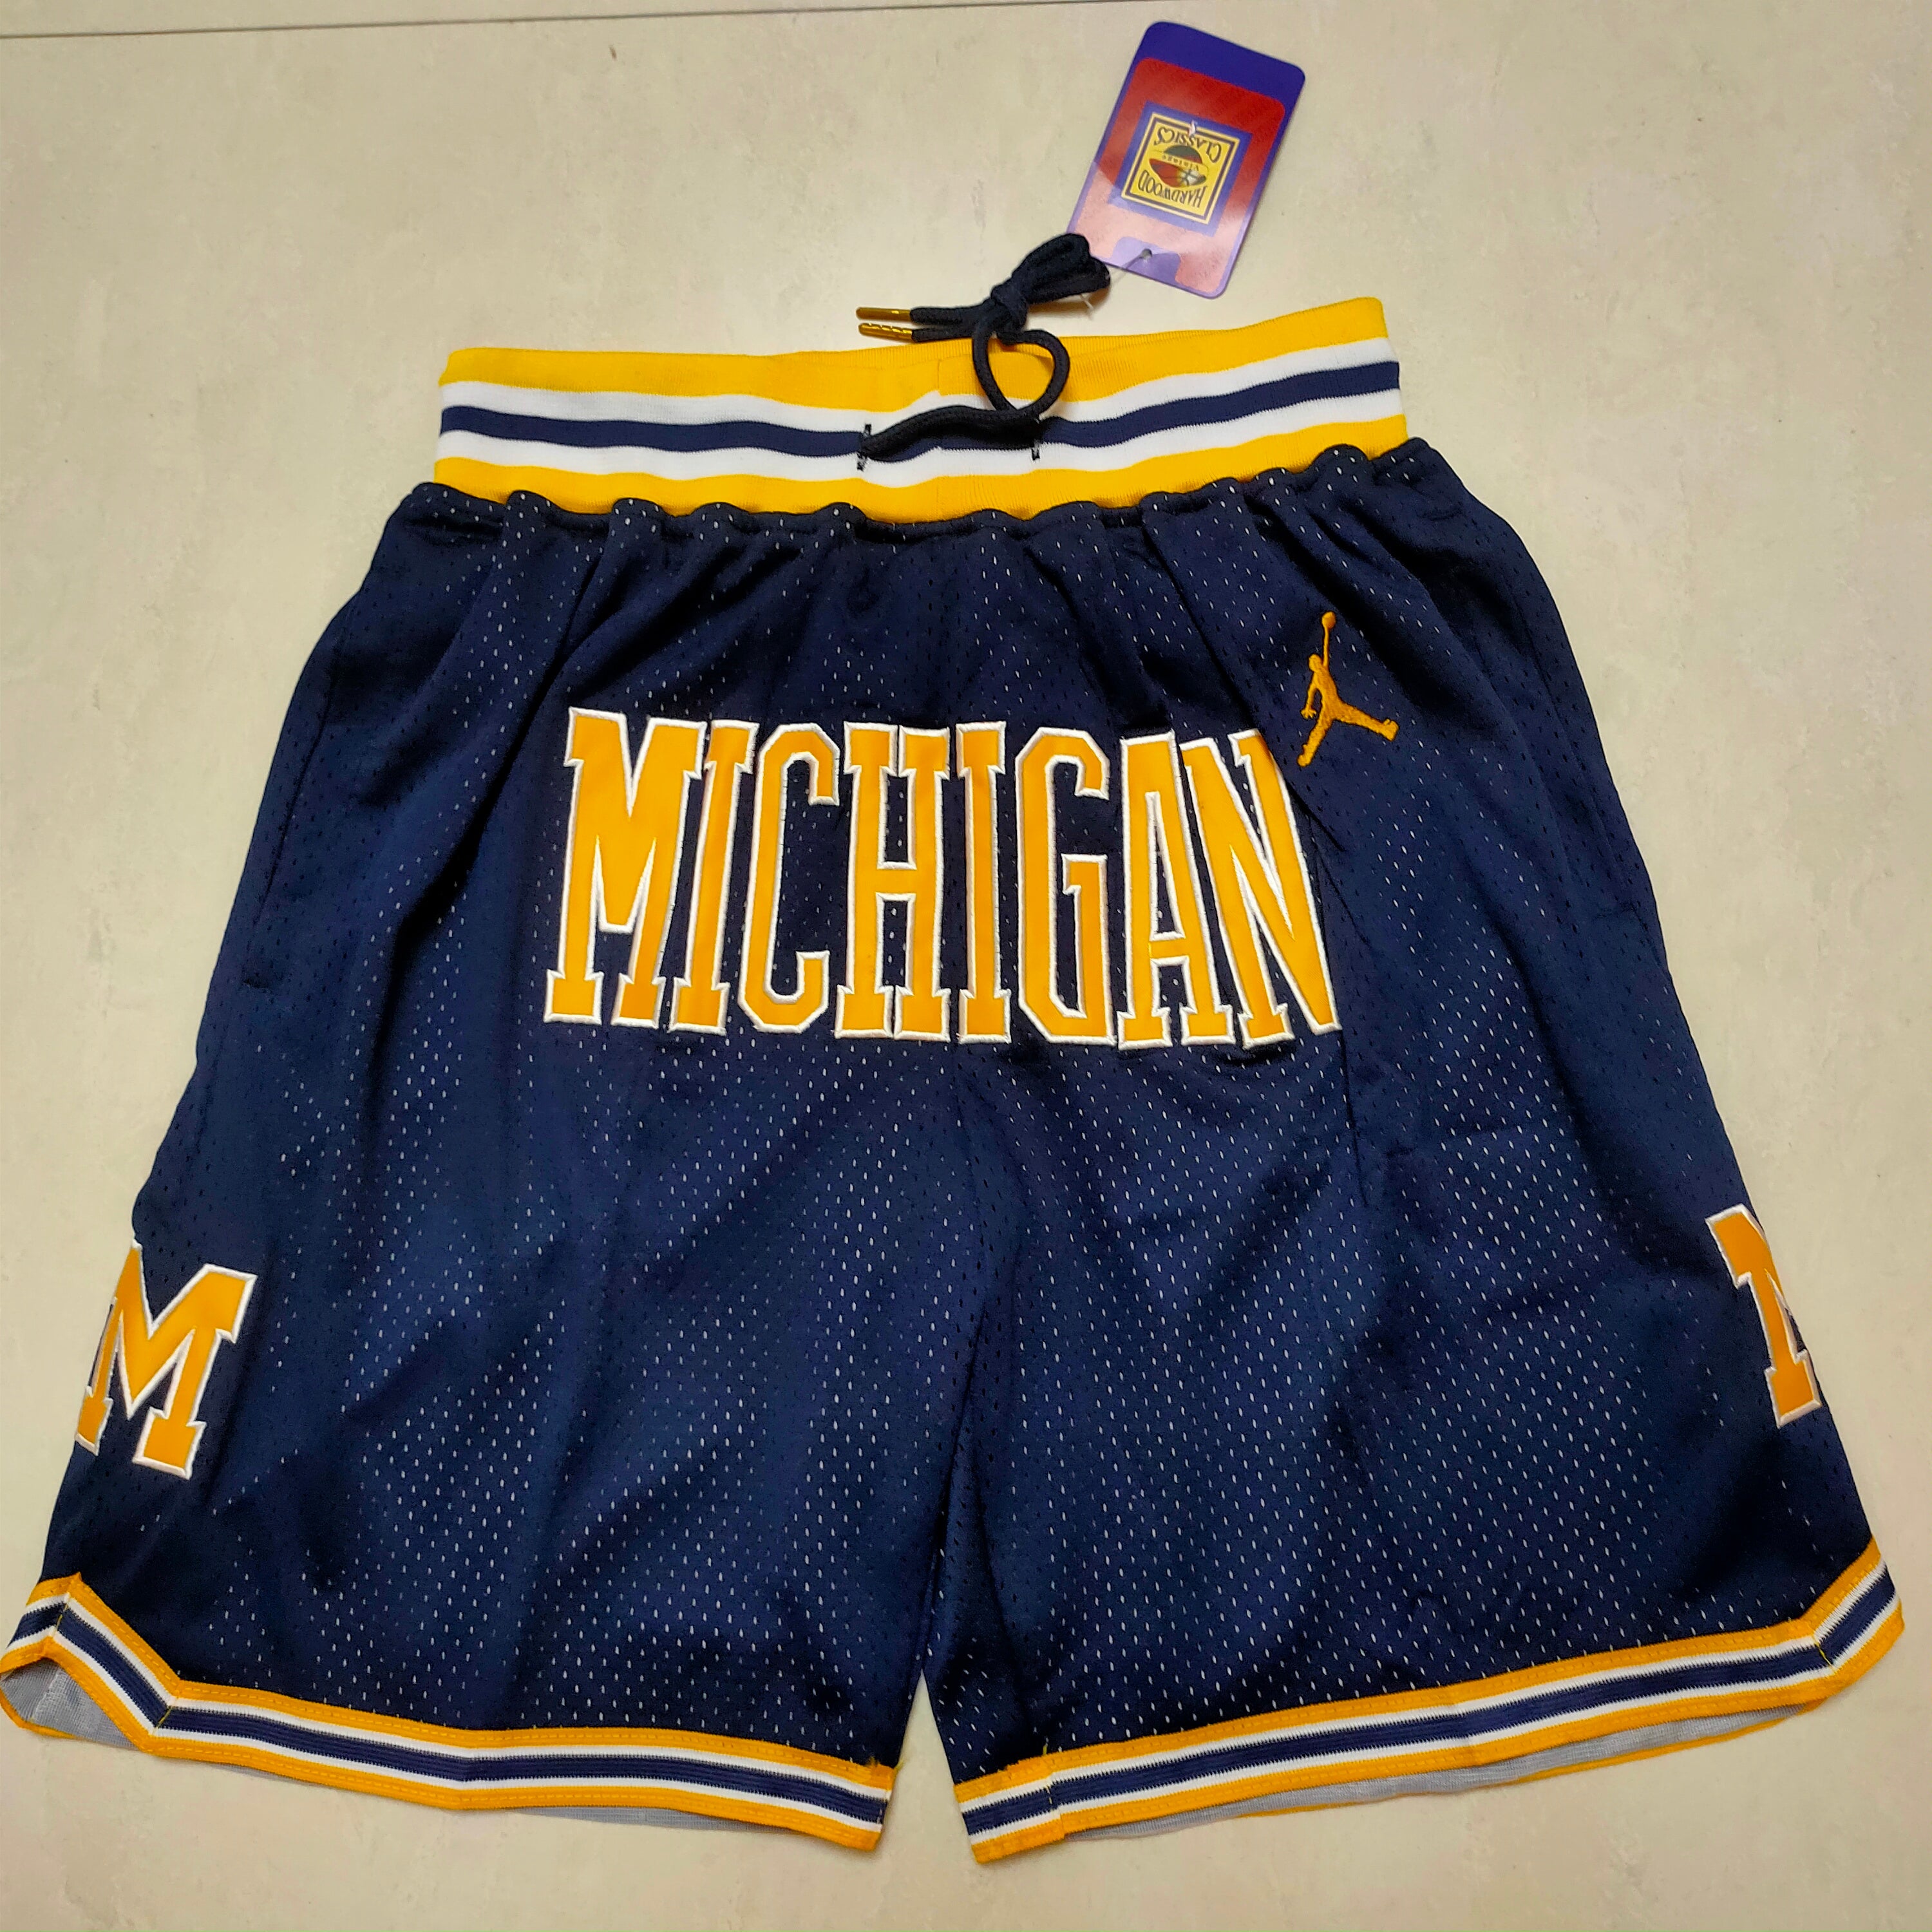 Michegan navy blue shorts